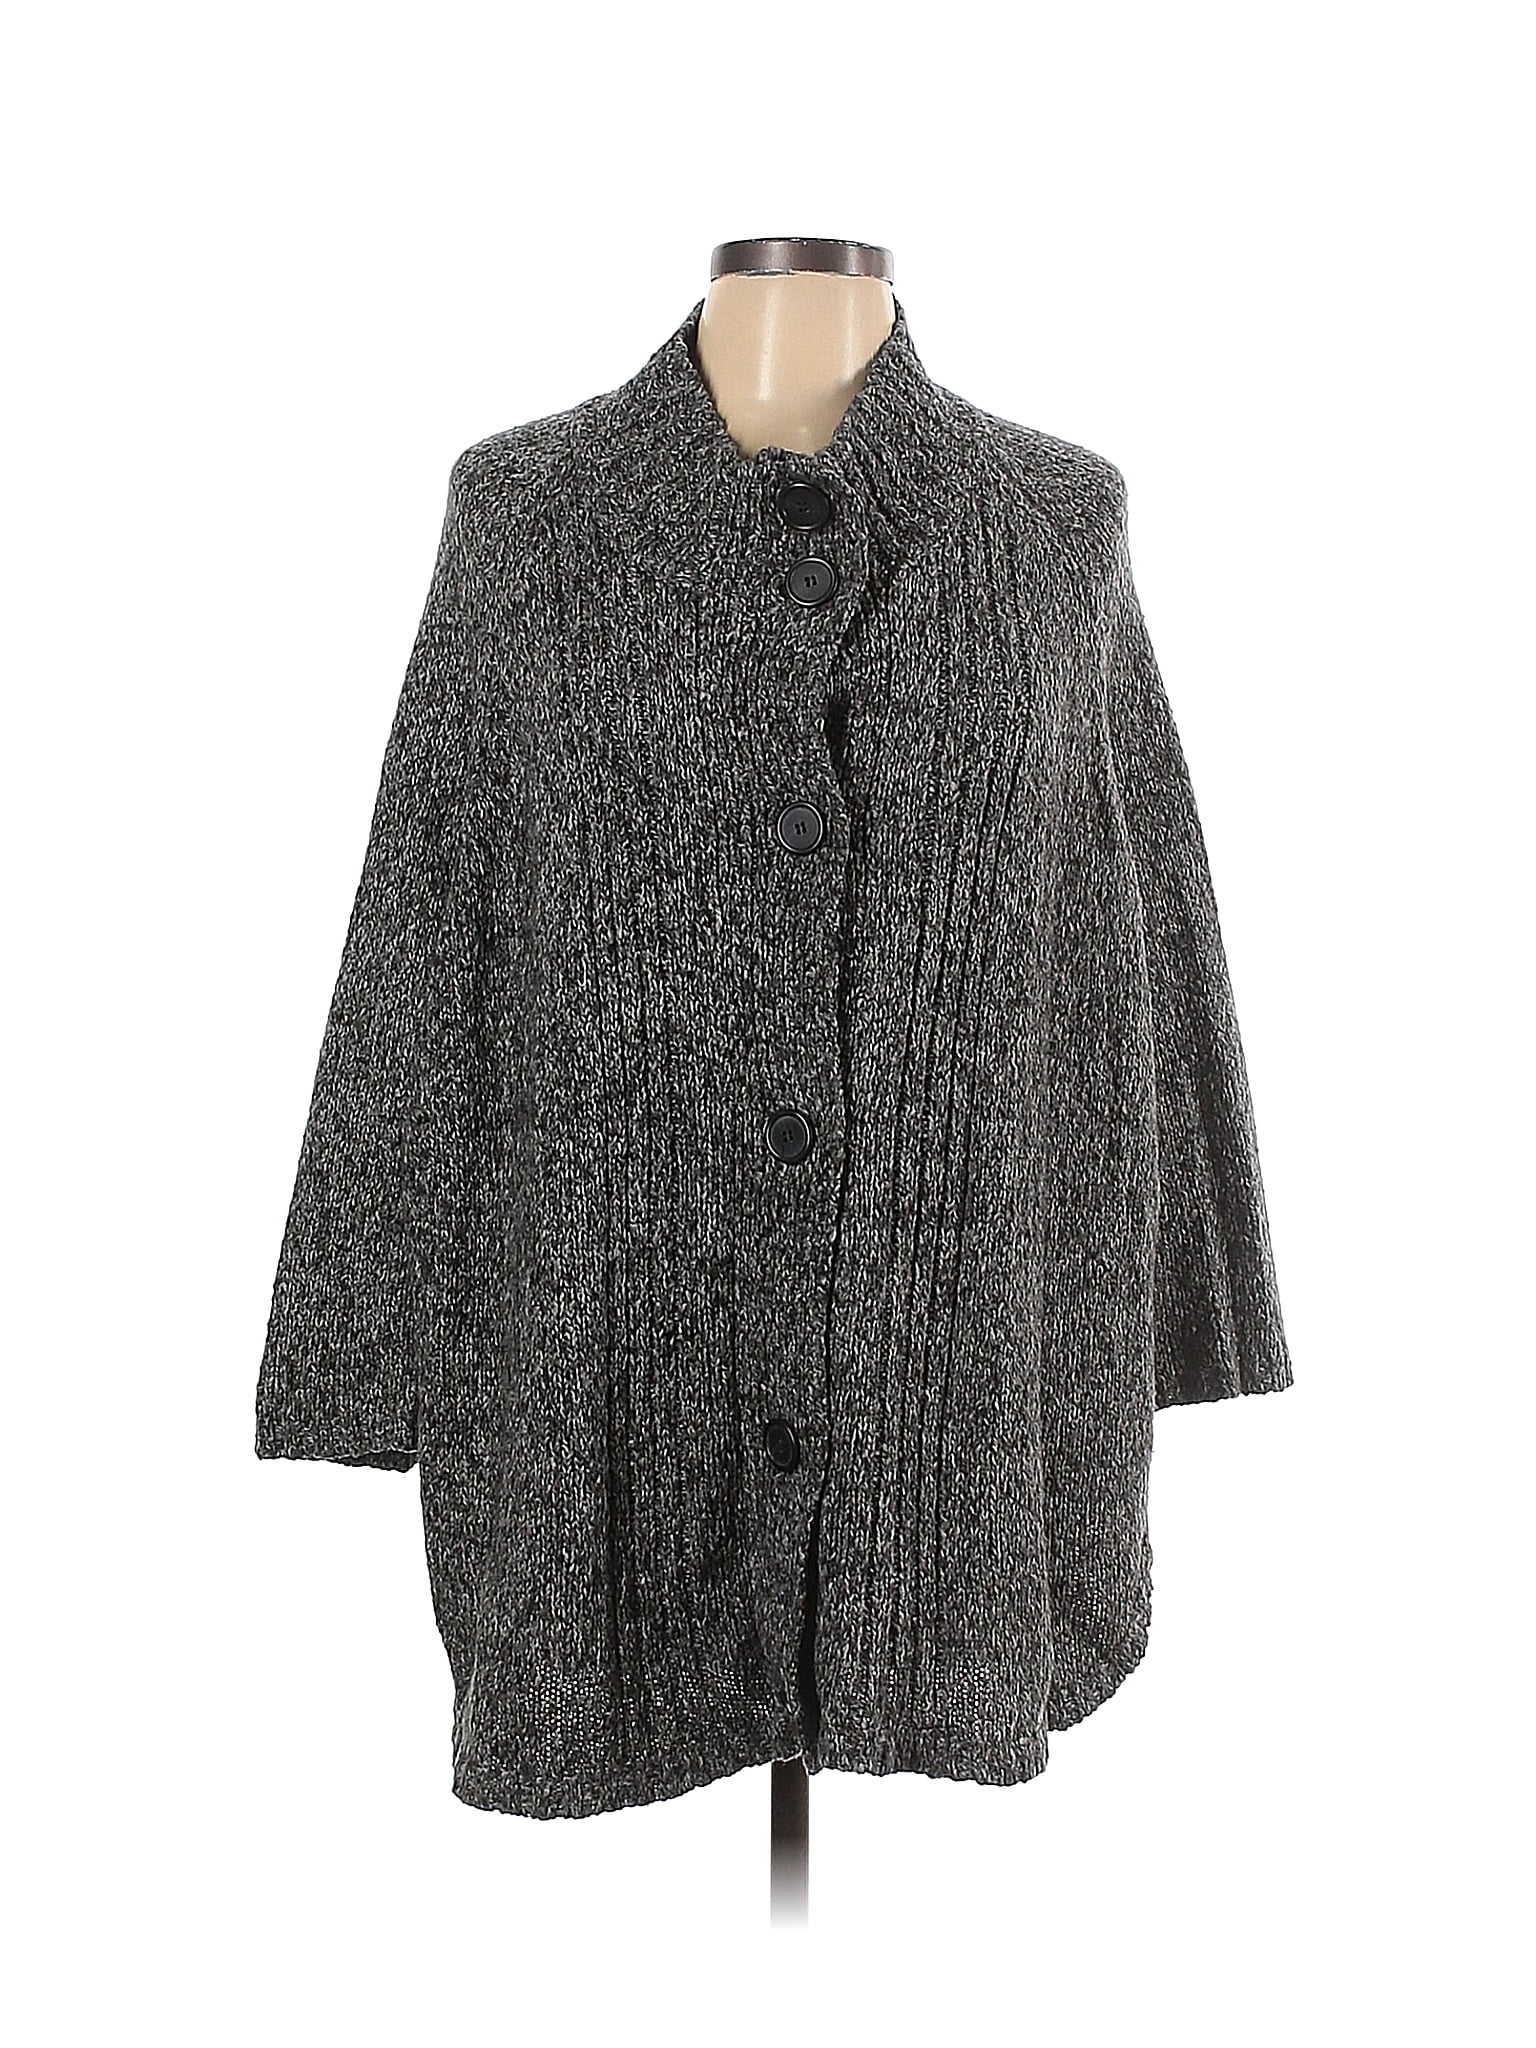 Simply Vera Vera Wang Gray Cardigan Size Lg - XL - 57% off | thredUP